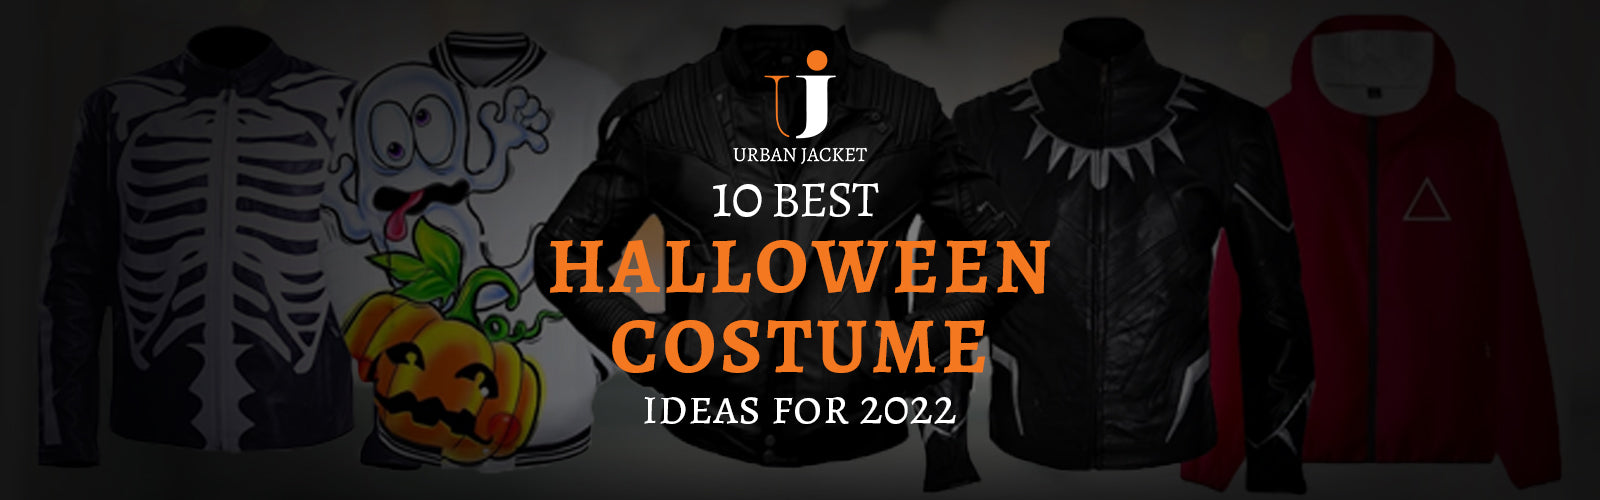 10 Best Halloween Costume Ideas For 2022 - UrbanJacket